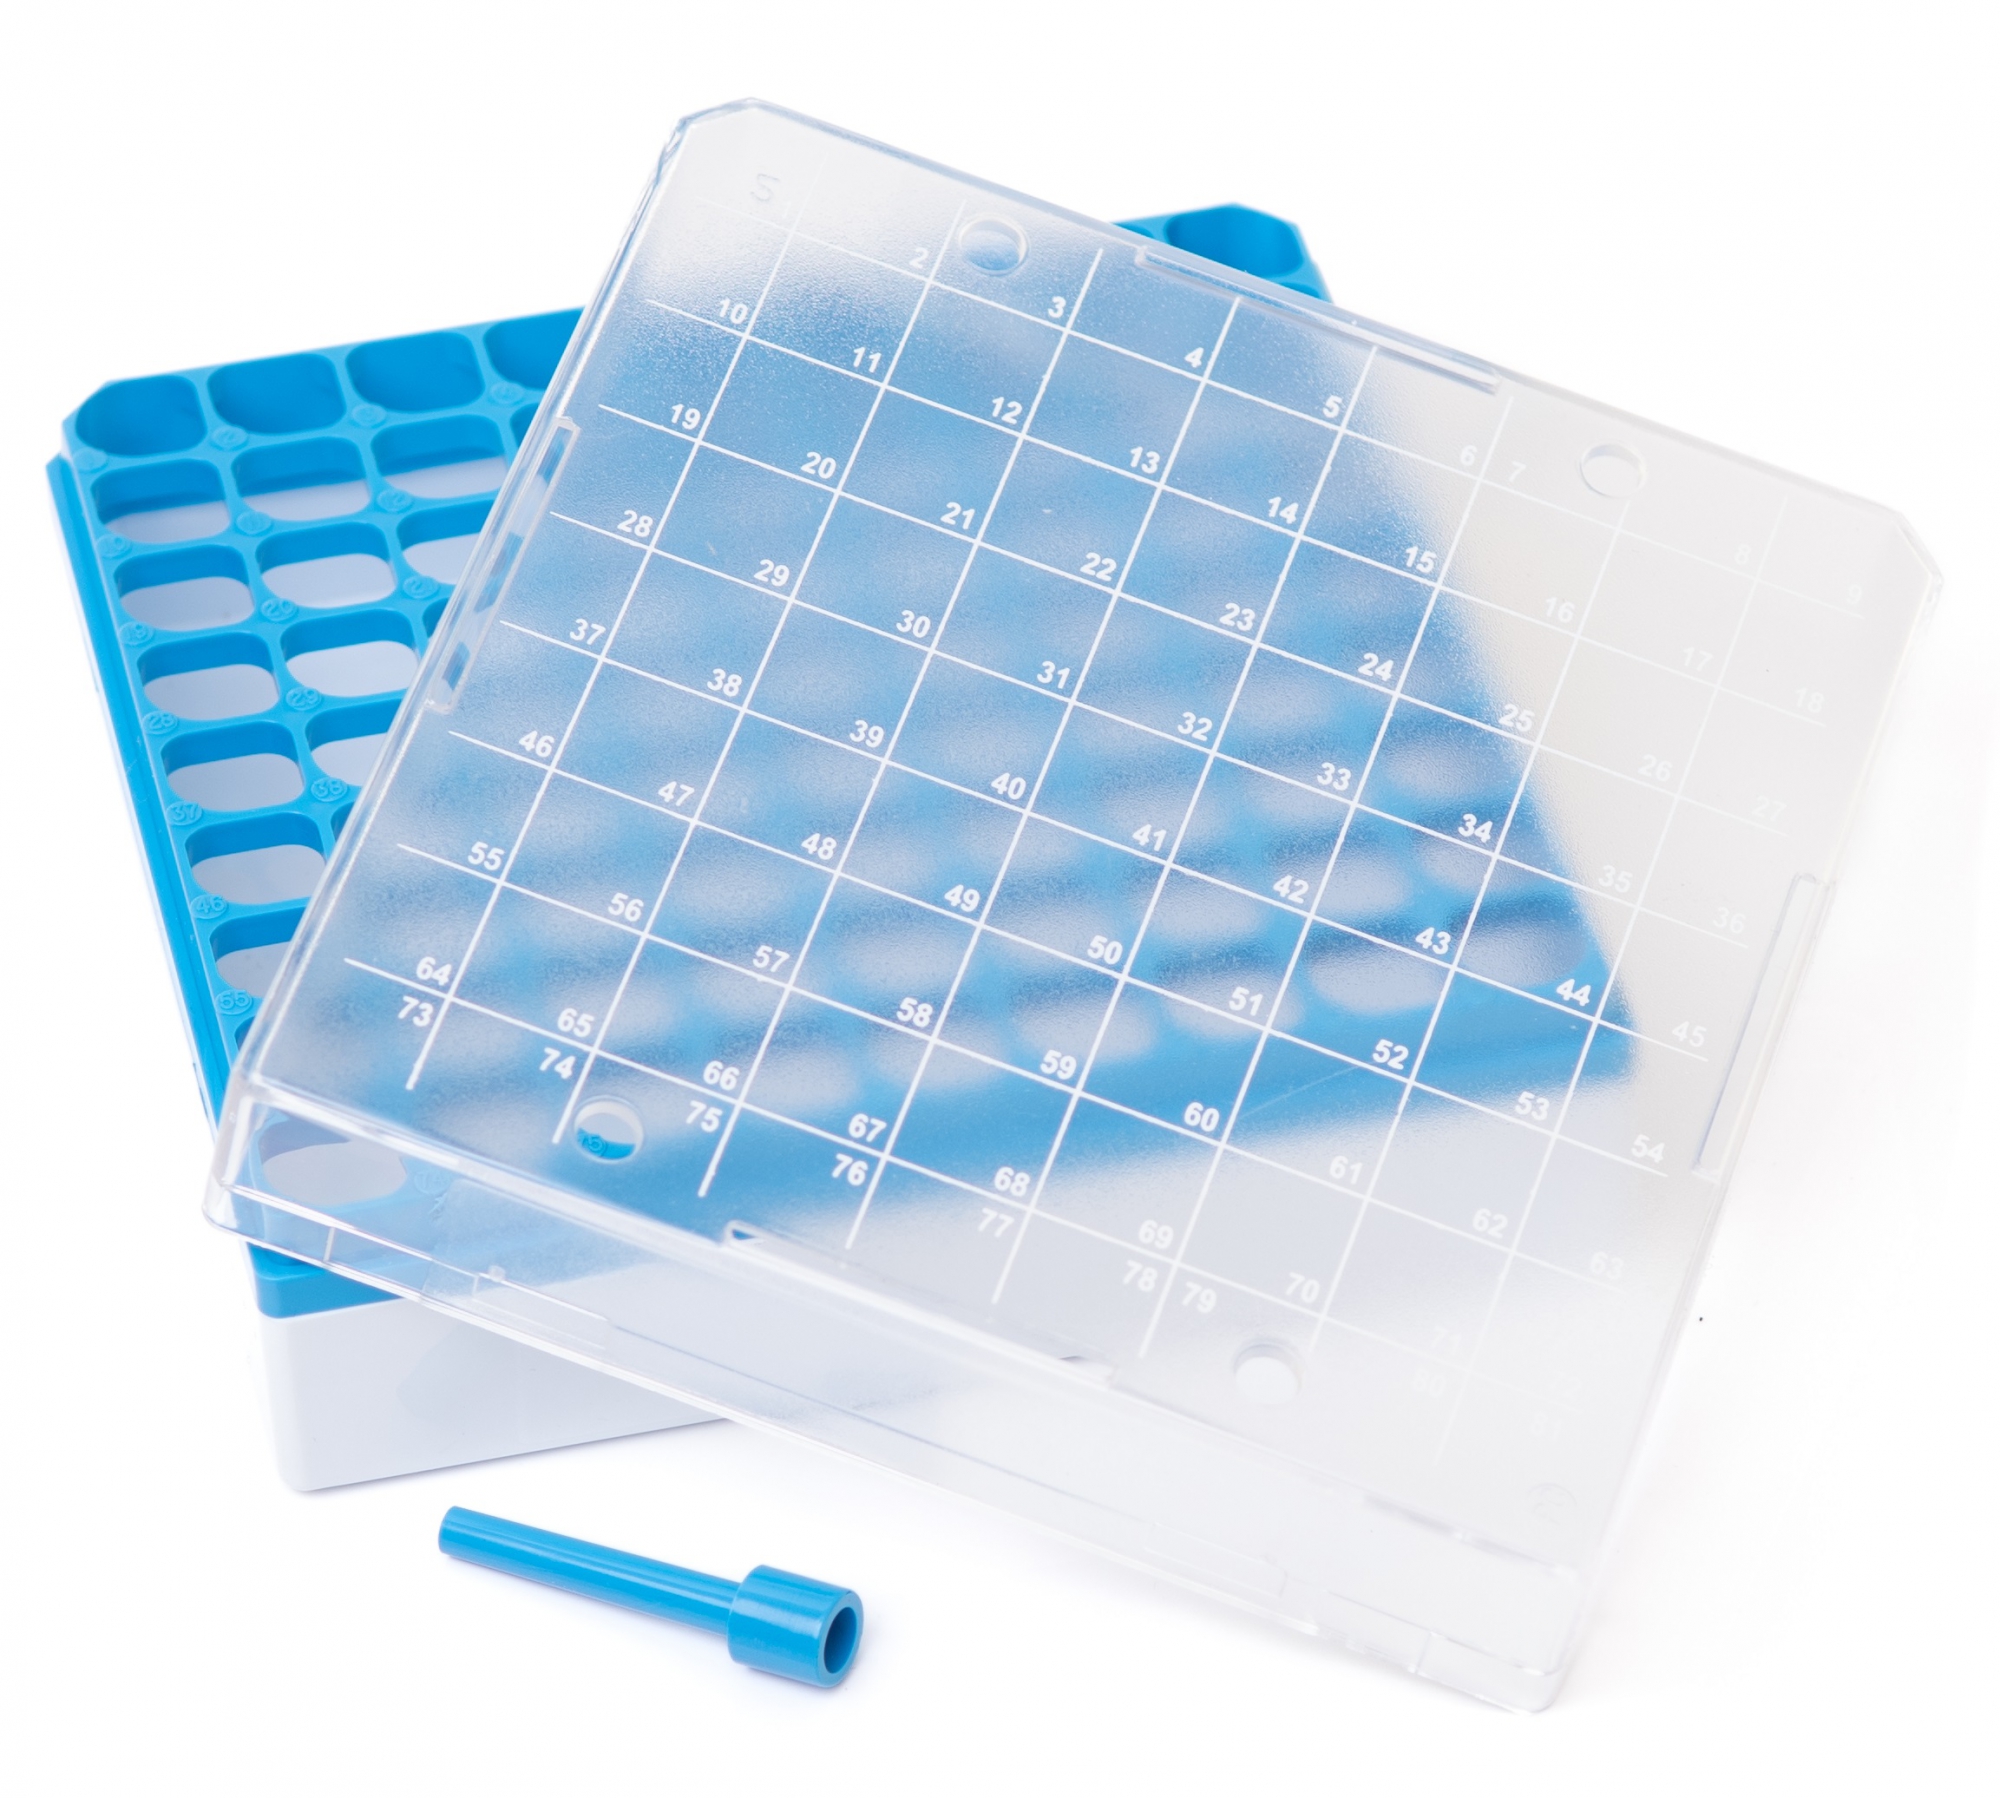 Cryobox polycarbonaat 133x133x52 mm met 5x5, 9x9 of 10x10 vakverdeling - blauw